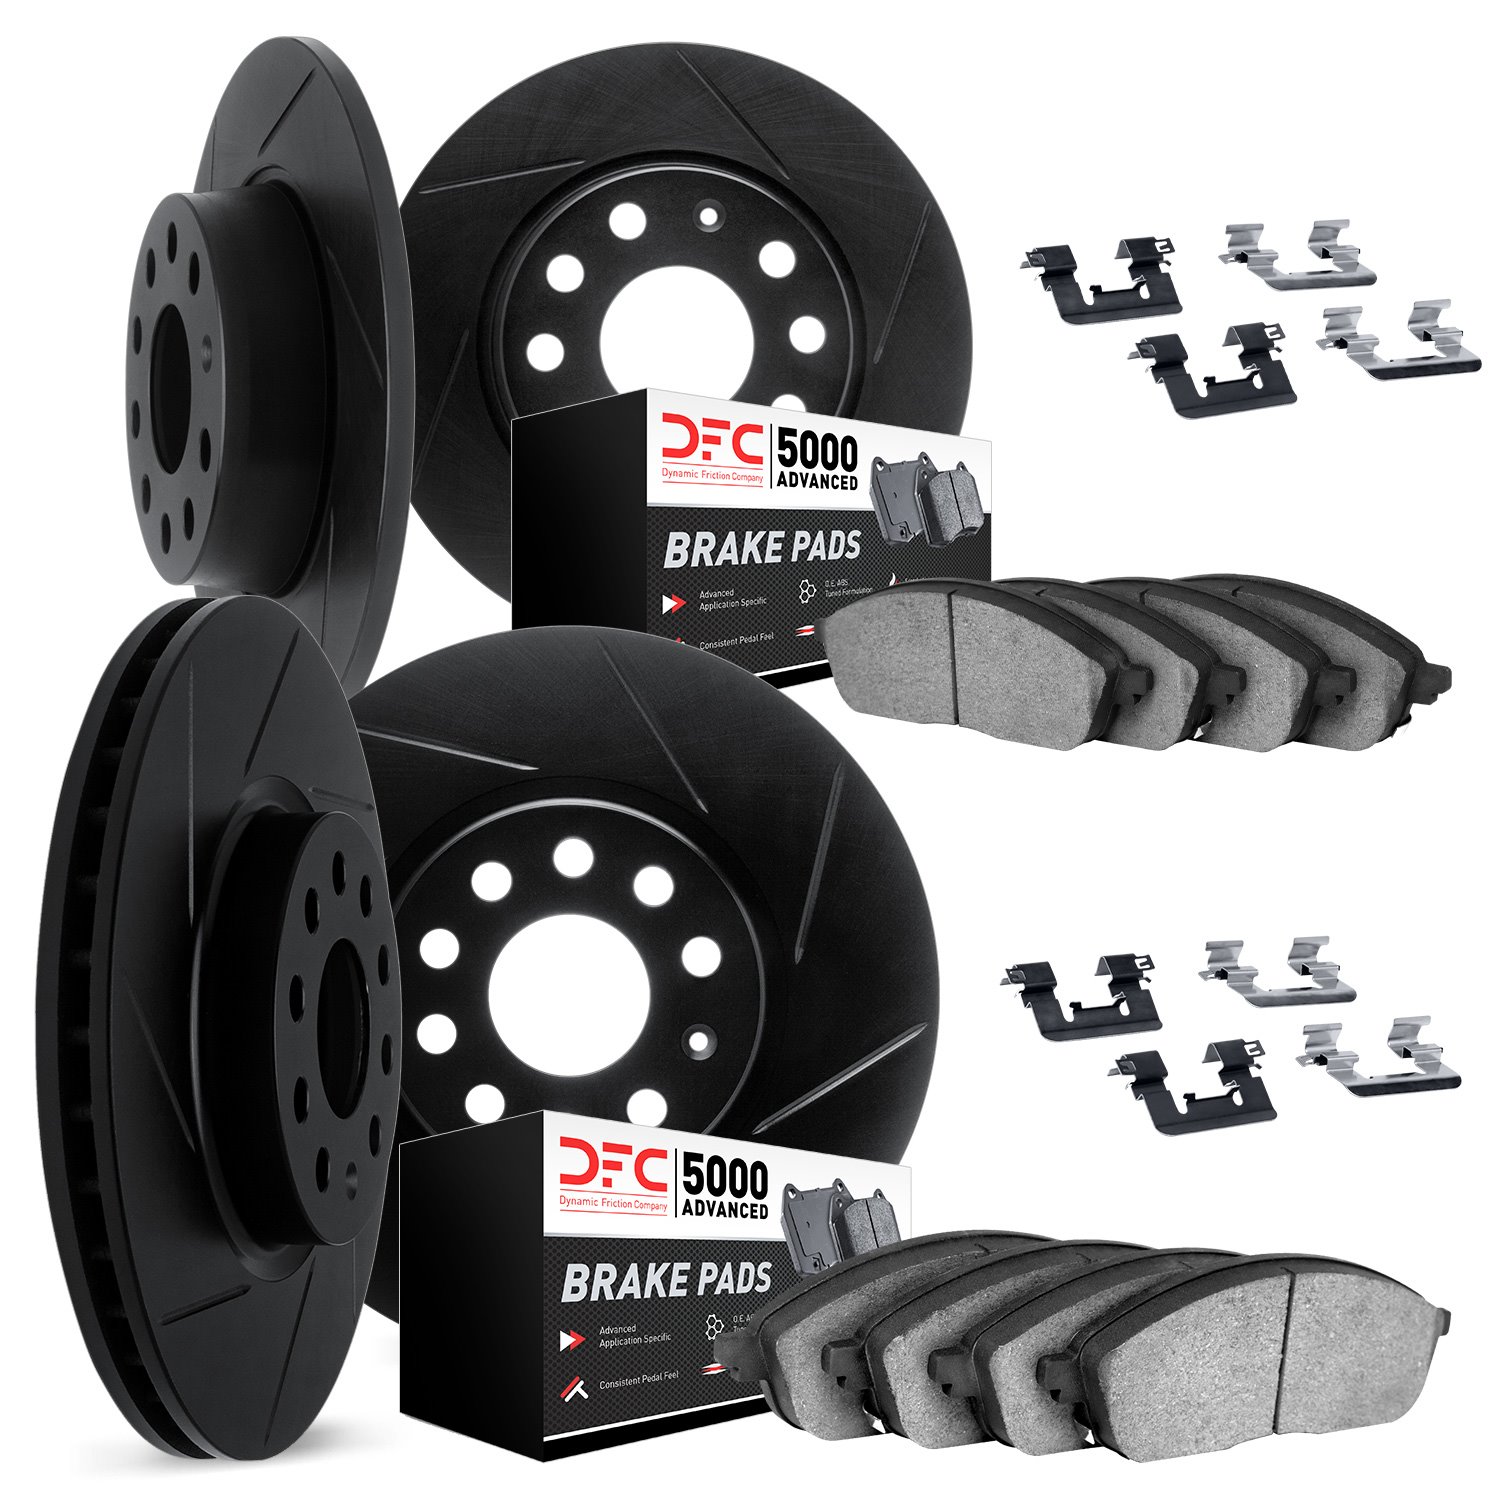 3514-40031 Slotted Brake Rotors w/5000 Advanced Brake Pads Kit & Hardware [Black], Fits Select Mopar, Position: Front and Rear